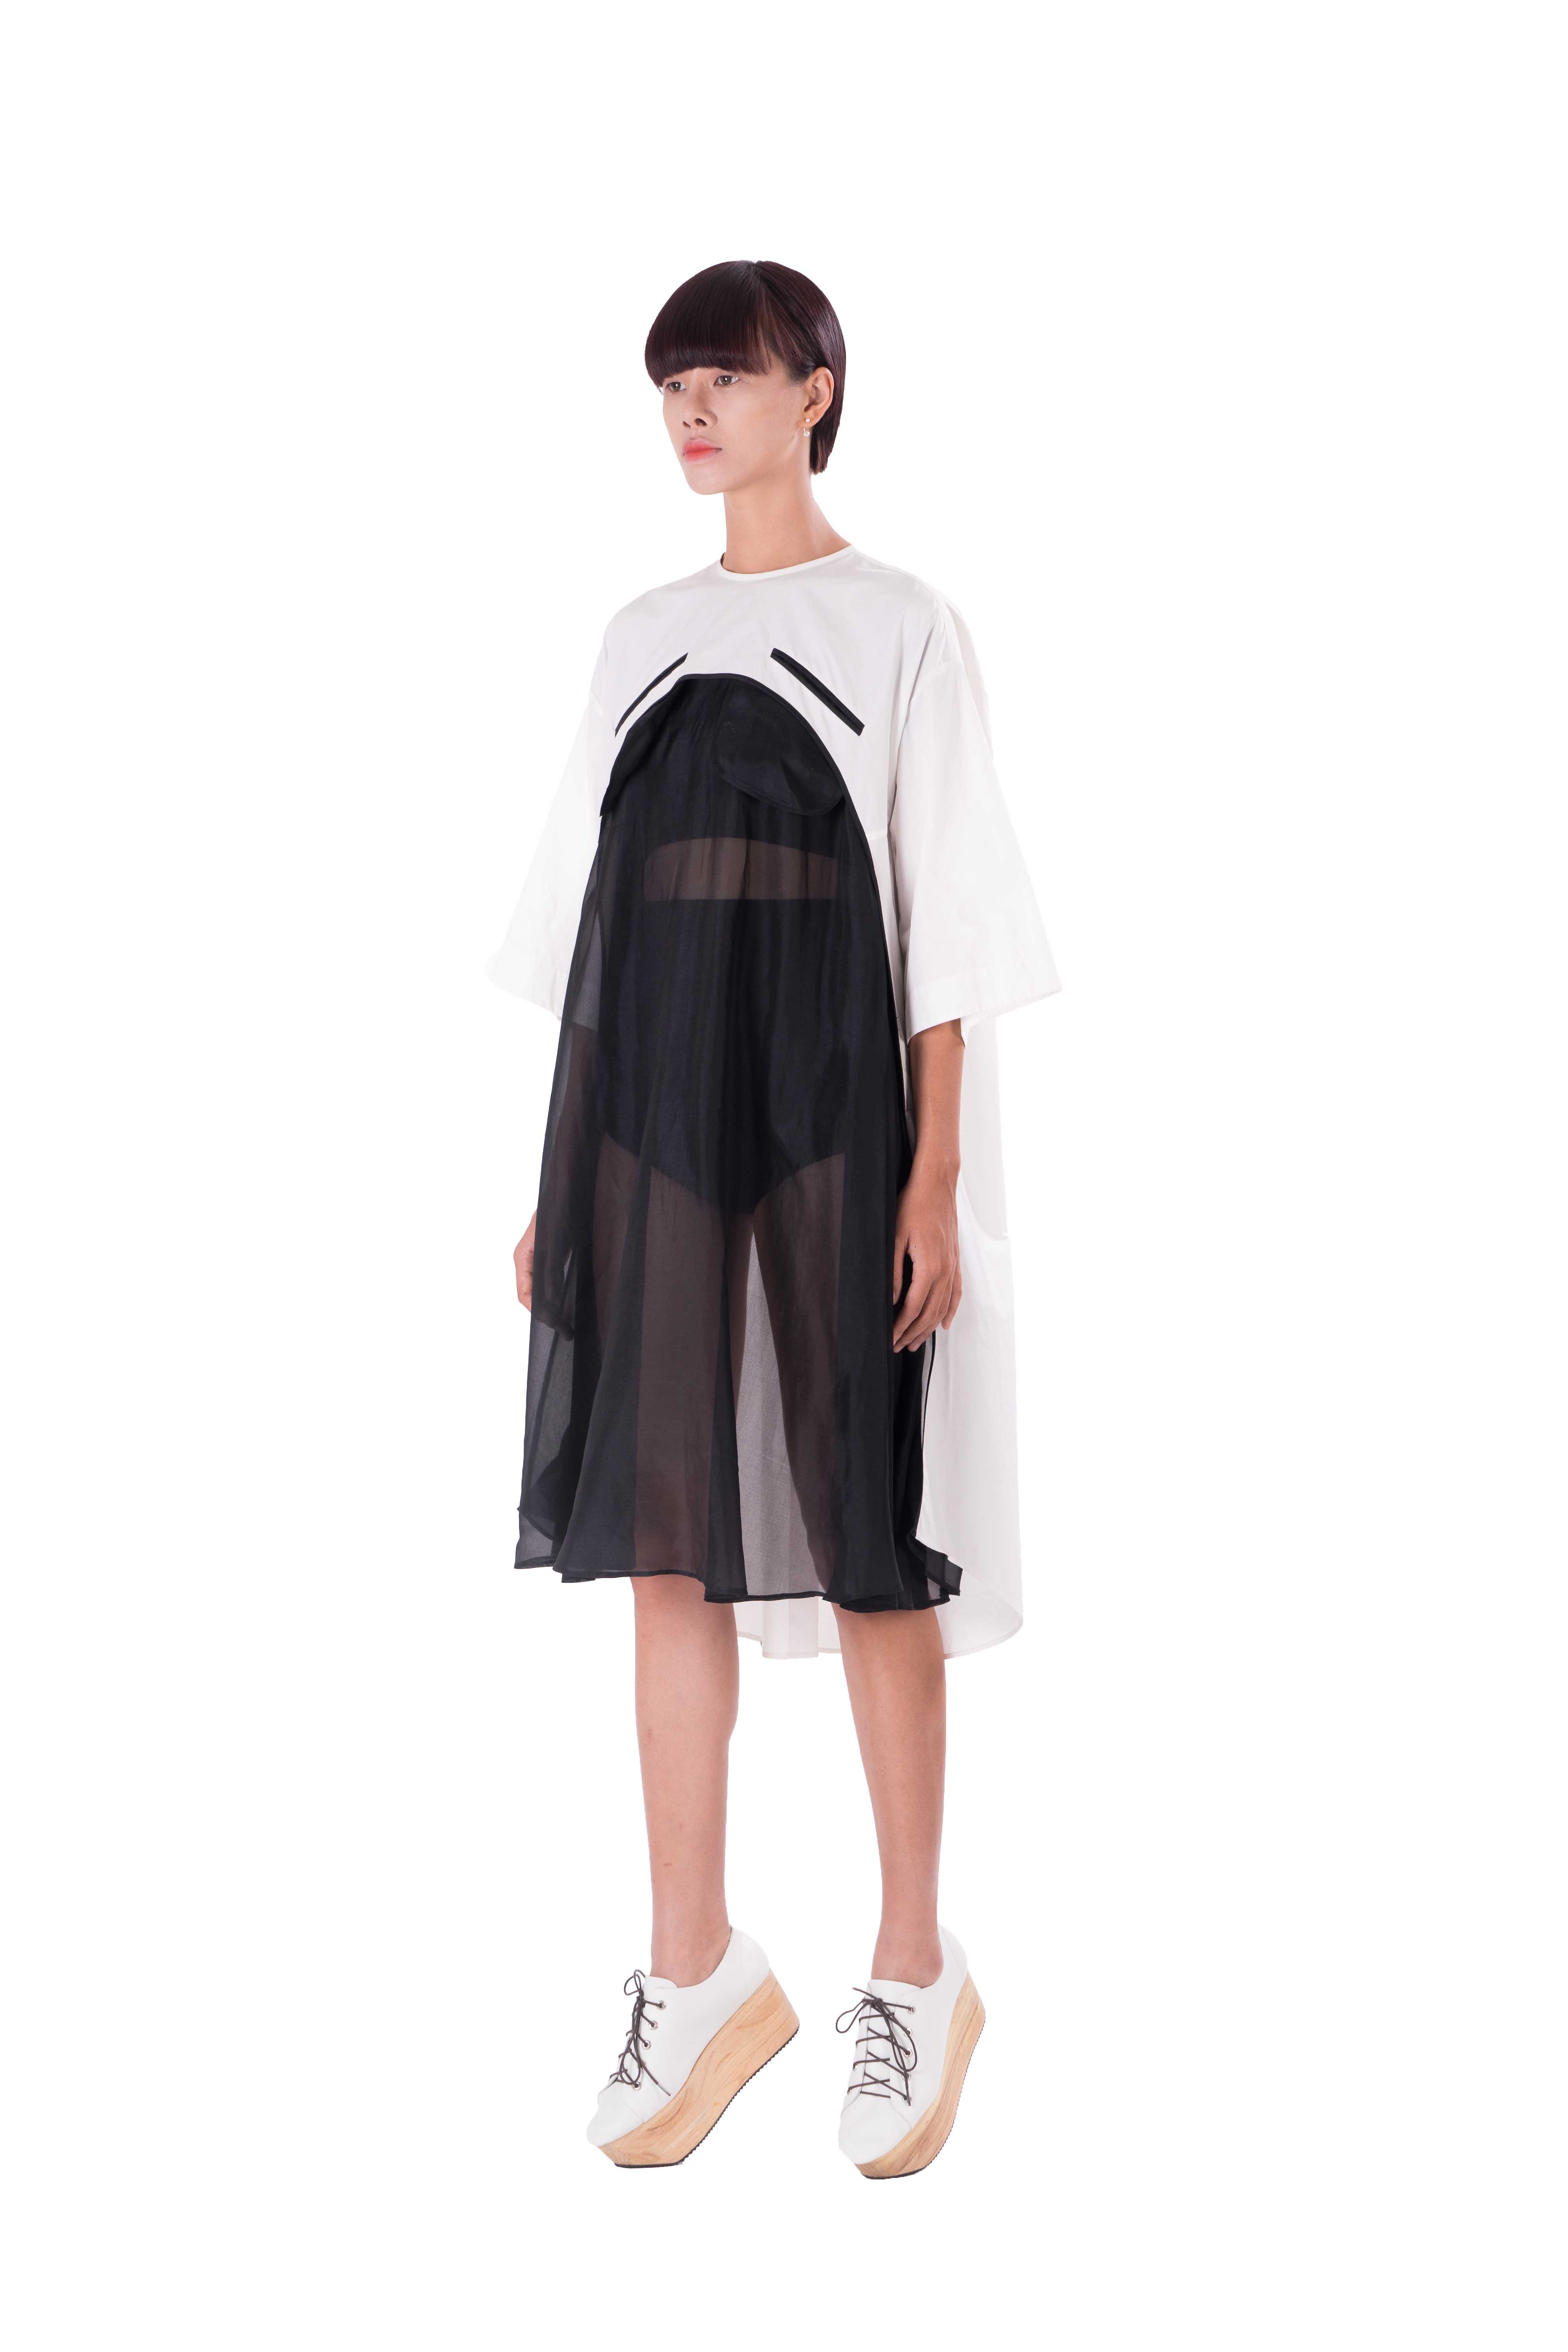 Black and white short sleeves kimono A line tunic